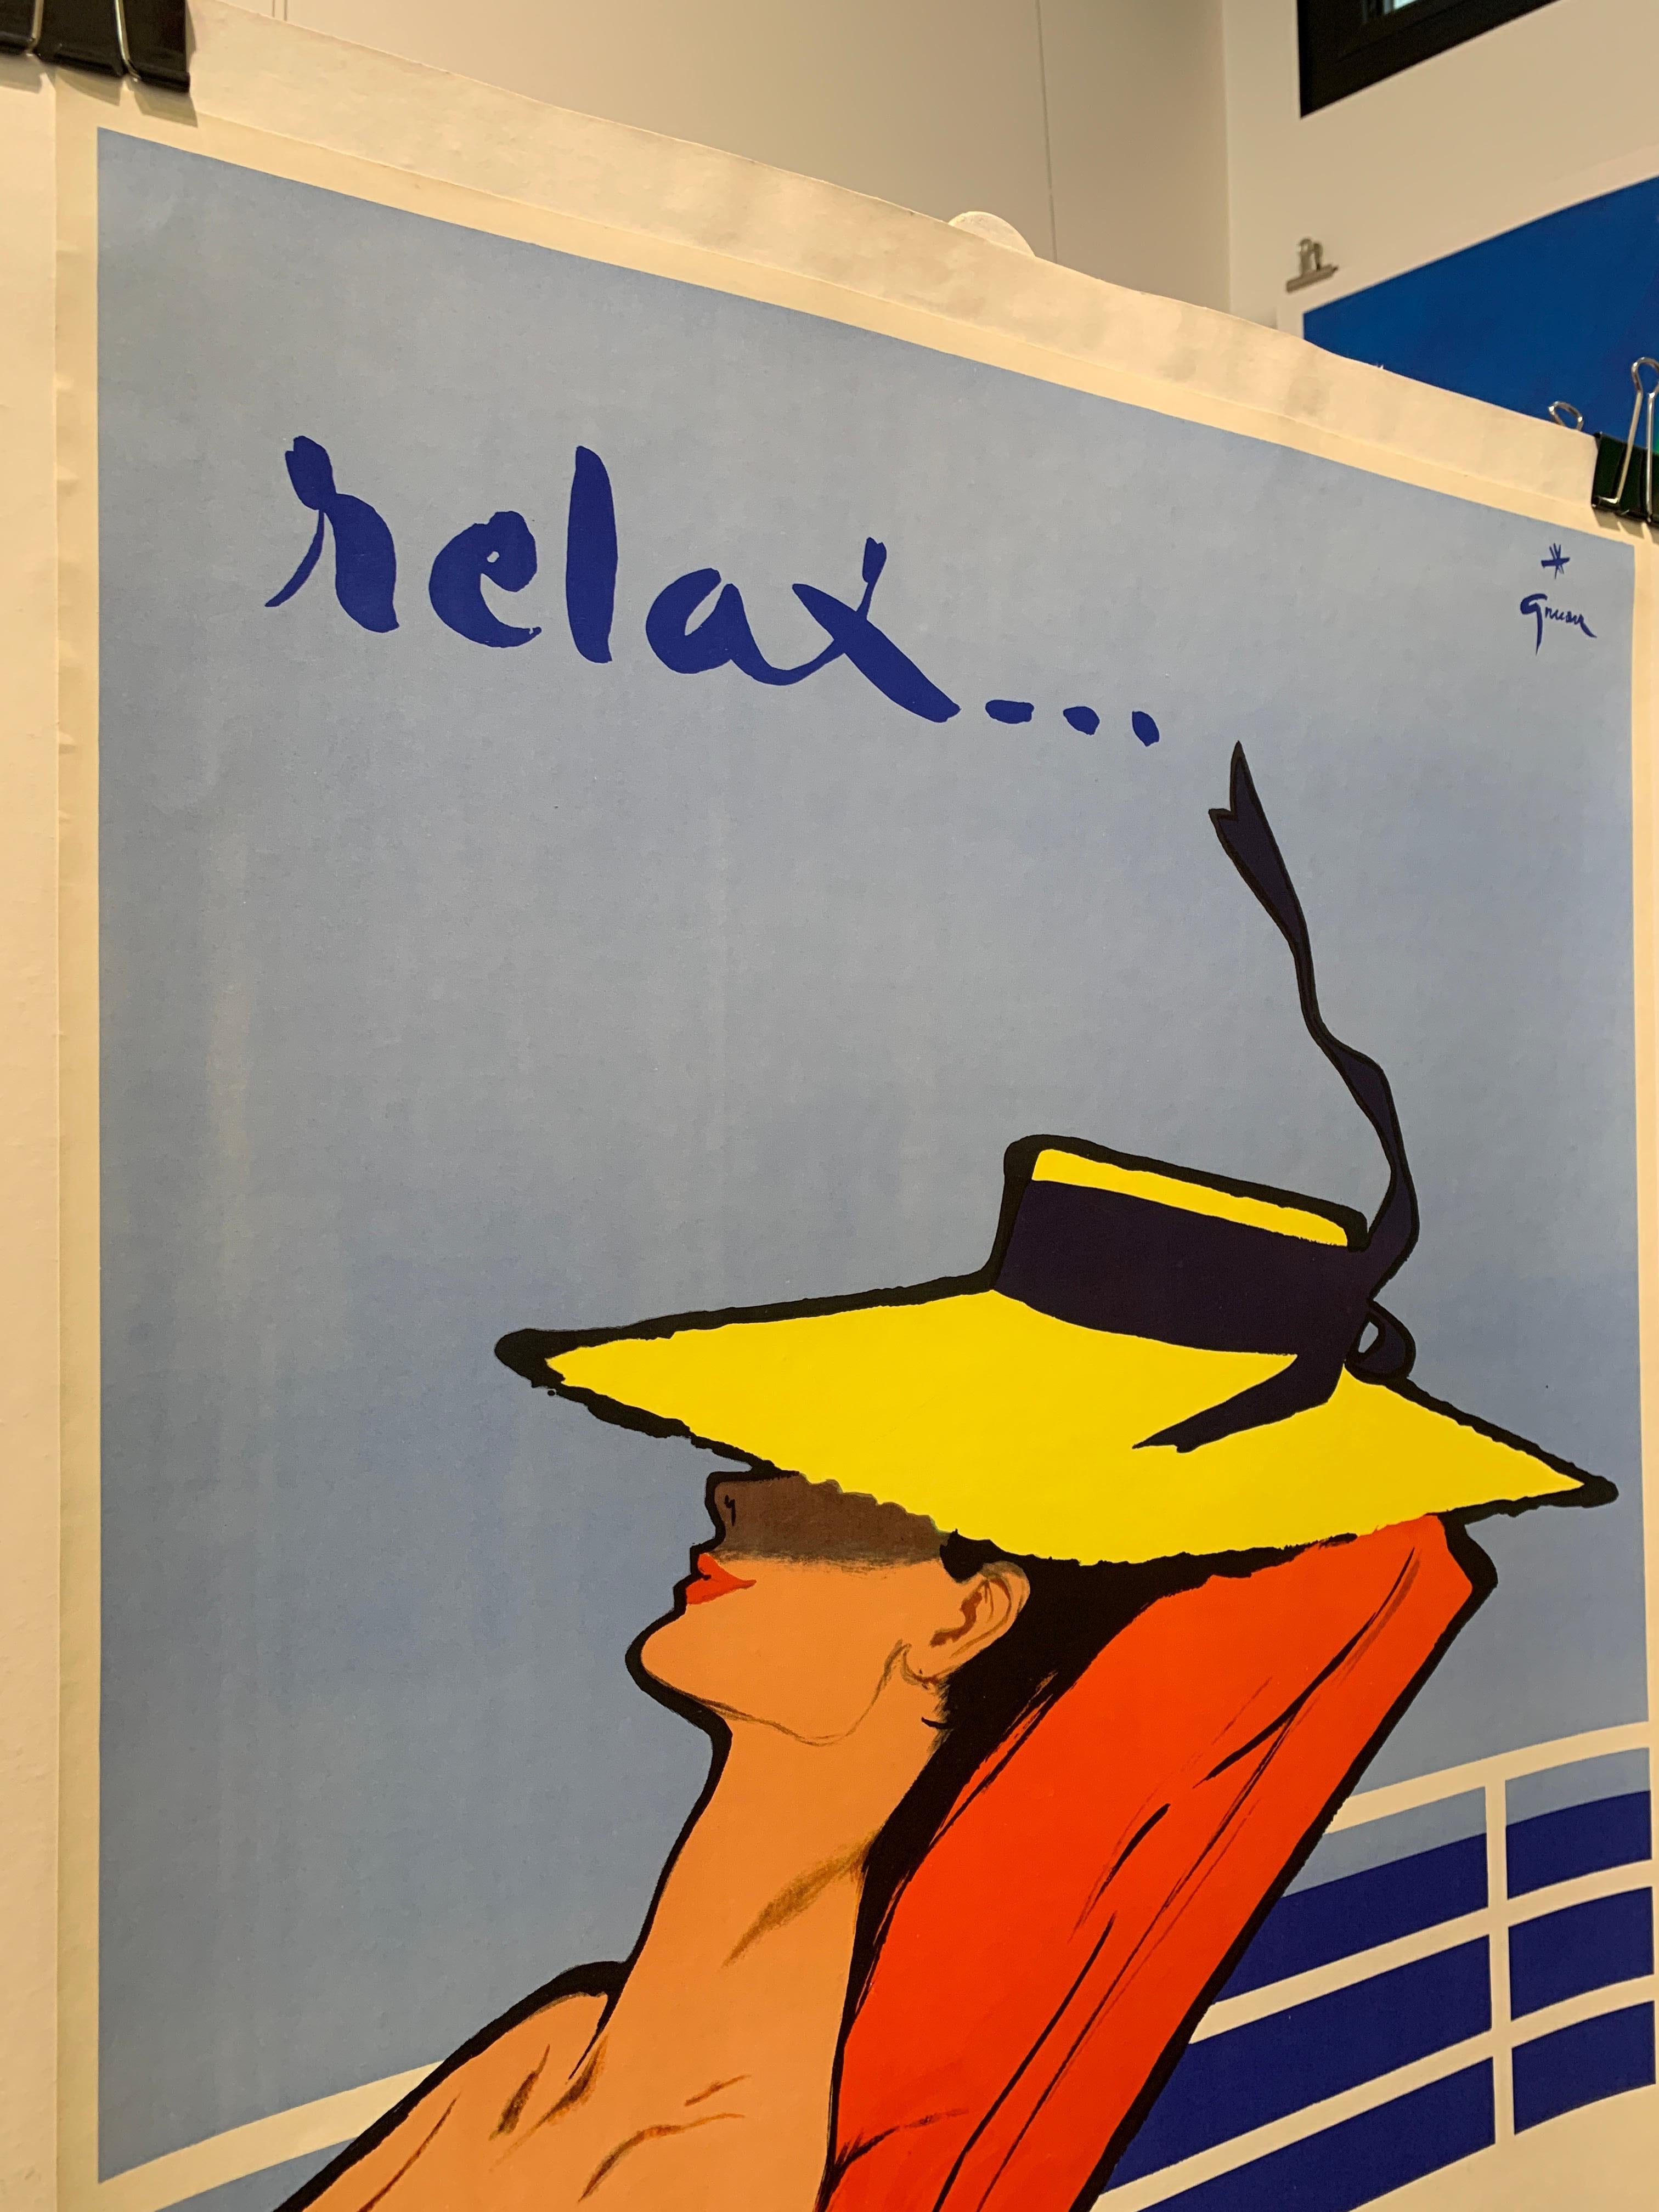 Original Vintage Poster, 'Relax' 1964 by Rene Gruau 2